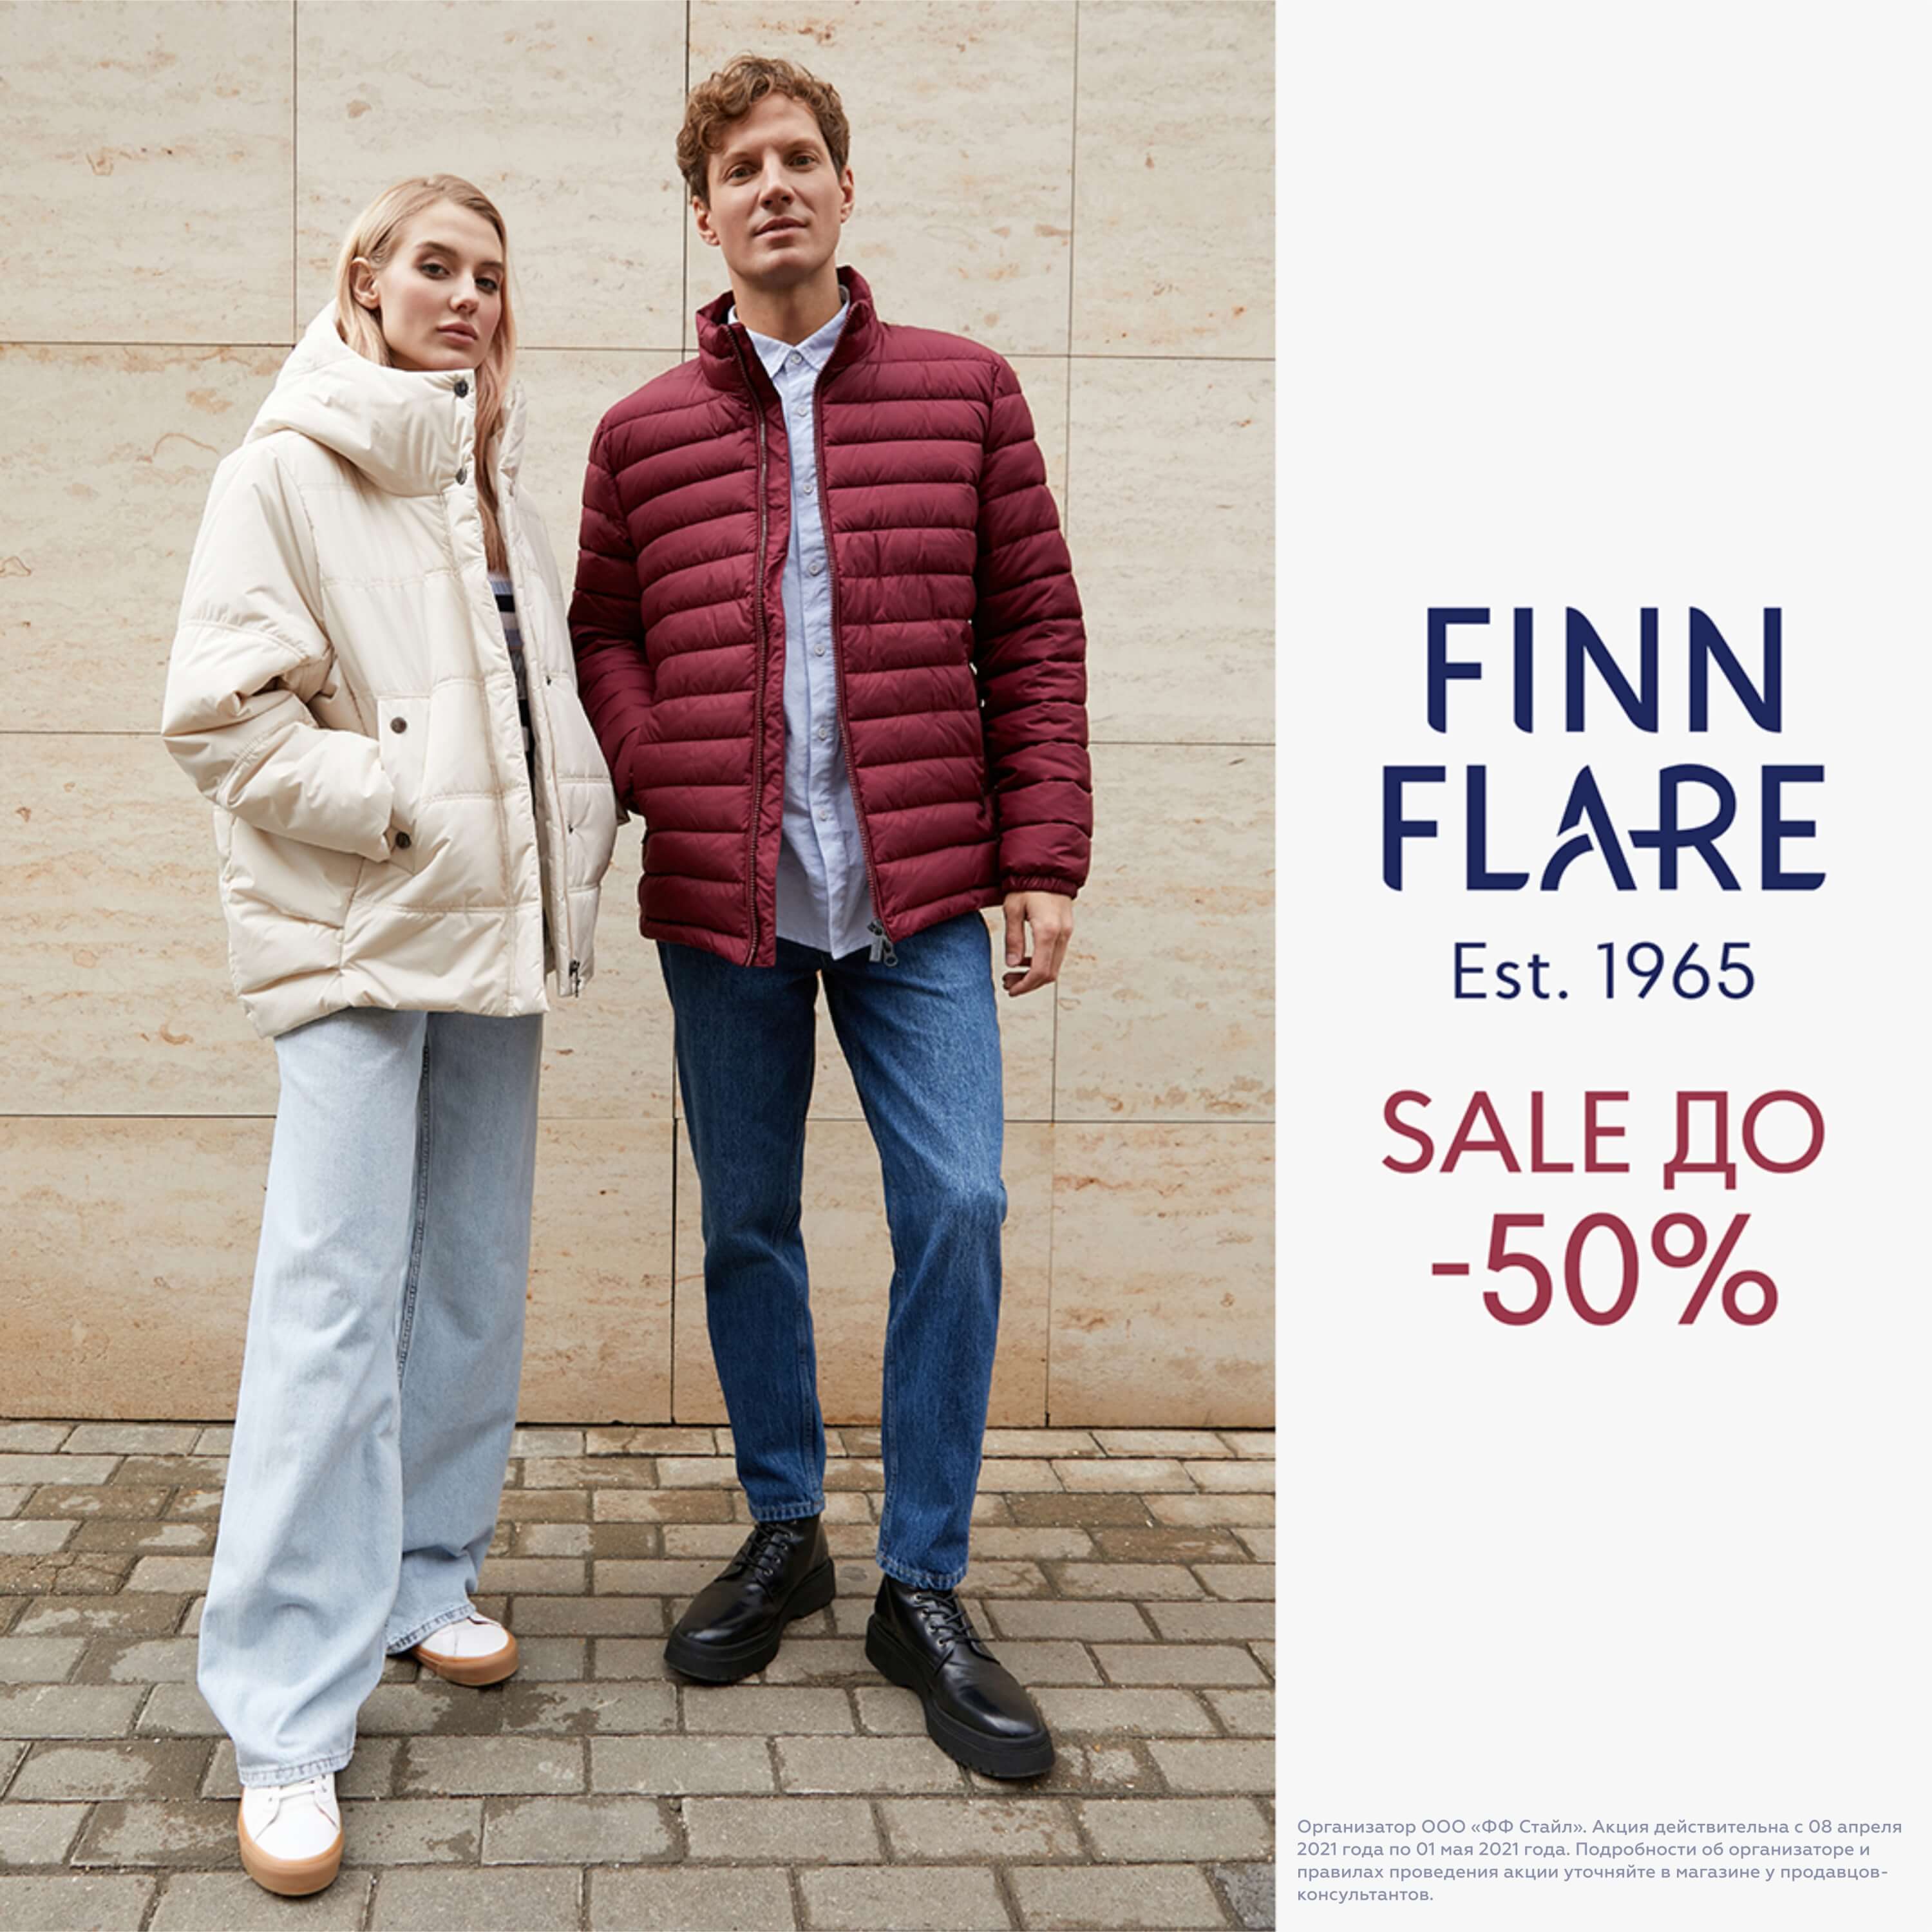 FiNN FLARE объявляет старт межсезонной распродажи